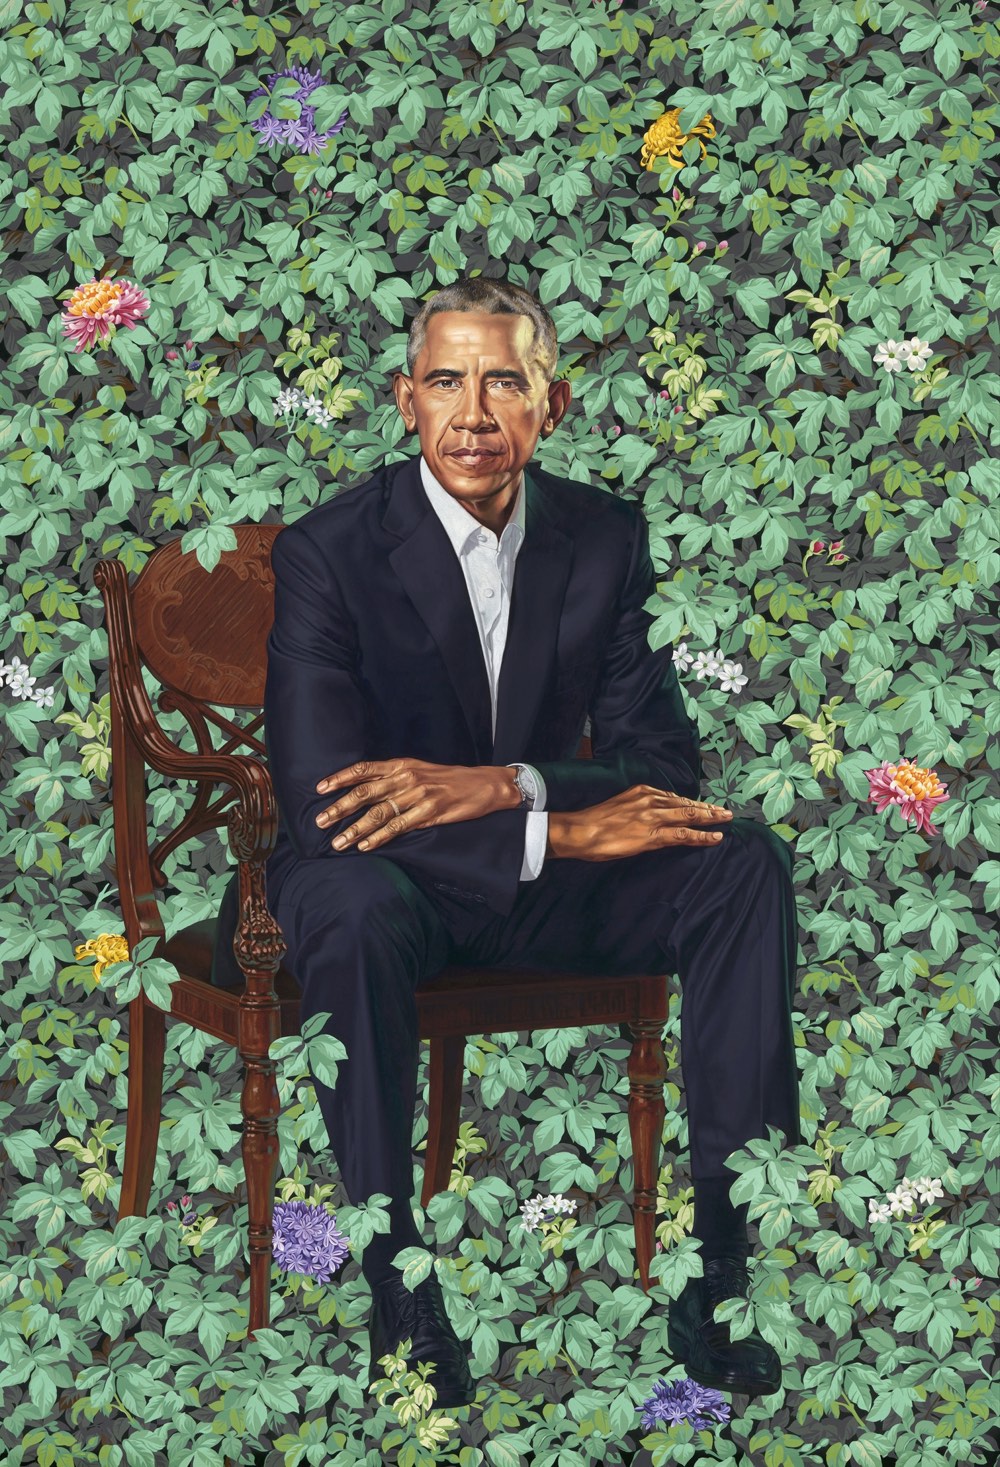 Obama Portraits